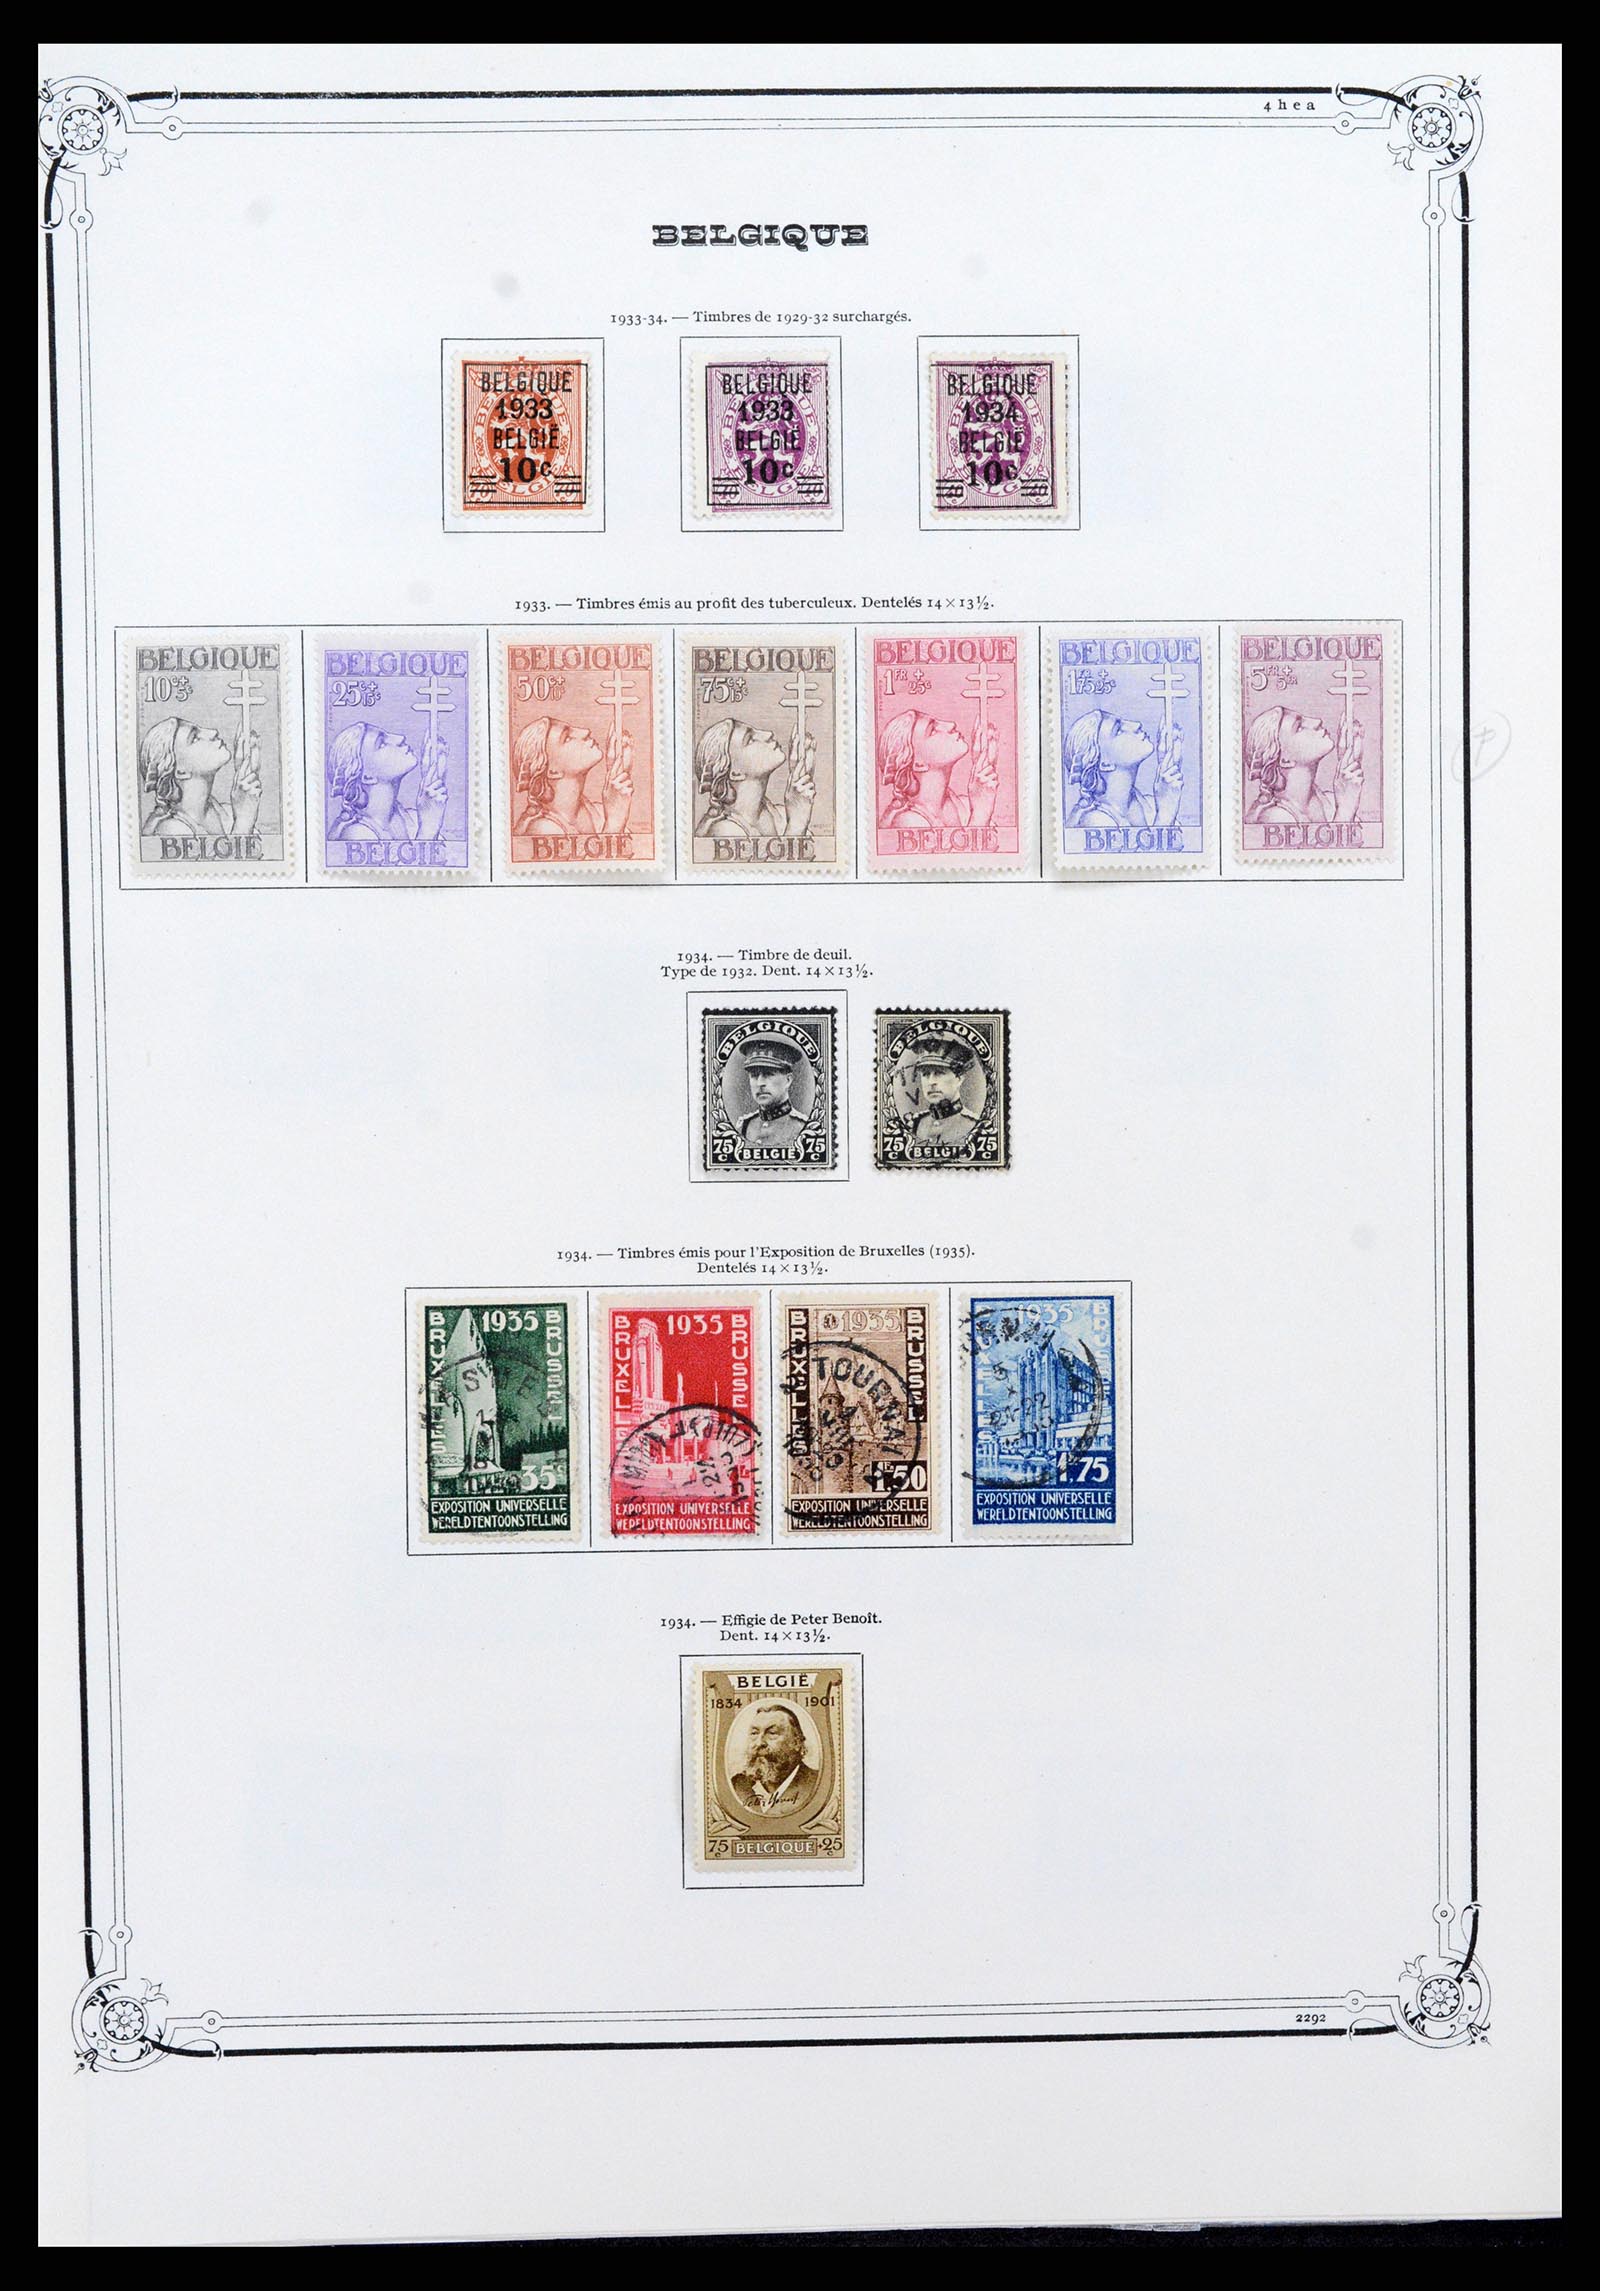 37538 019 - Stamp collection 37538 Belgium 1849-1941.